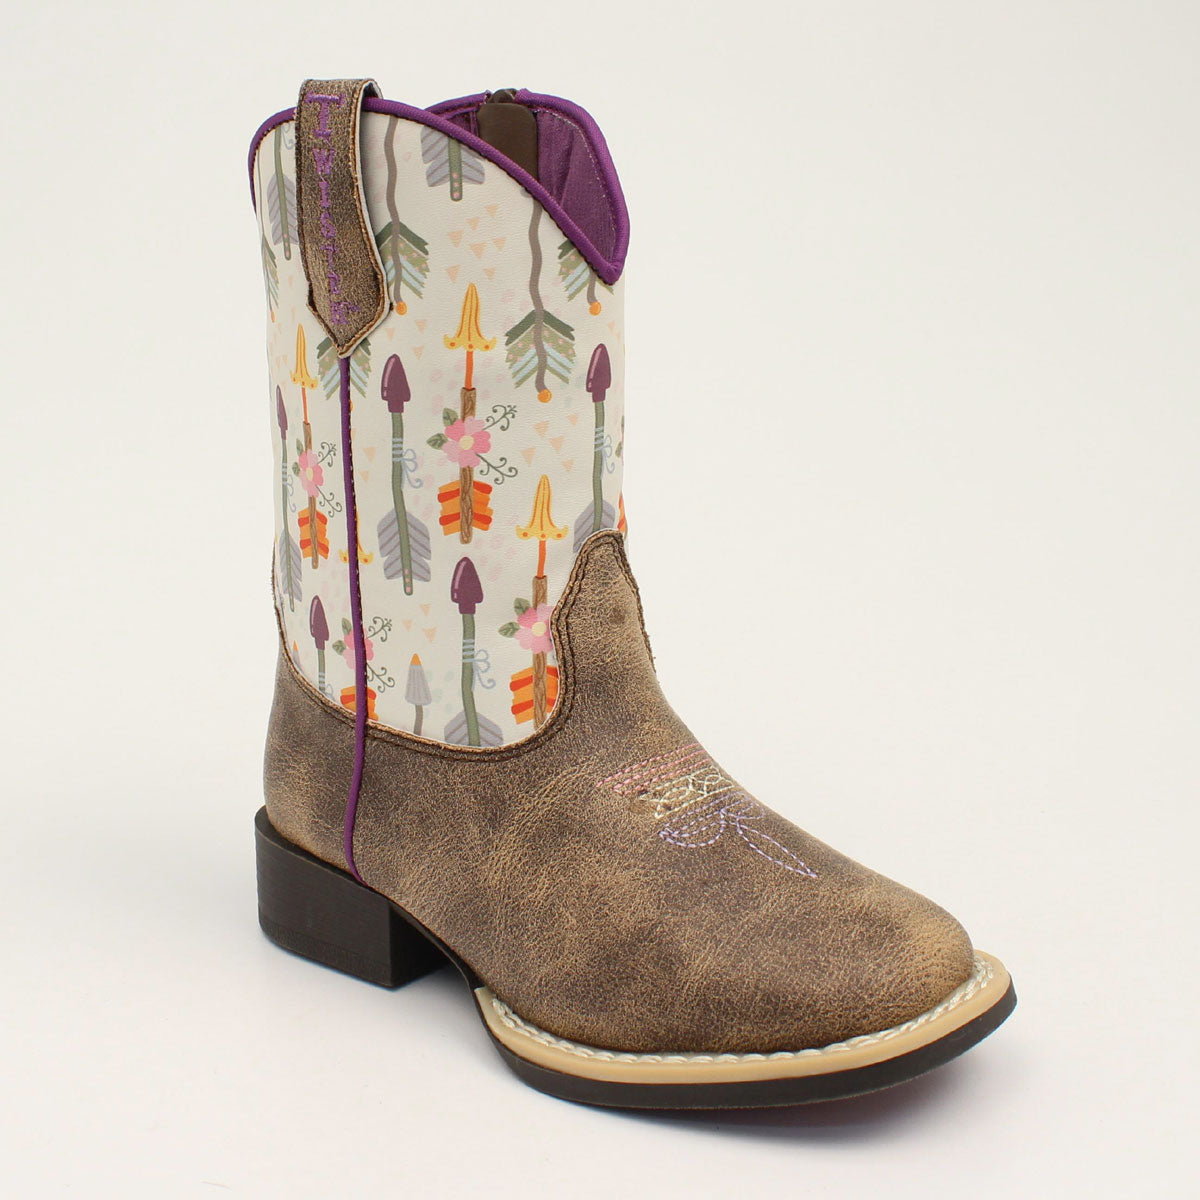 Double Barrel Children's Hannah Western Boots - Arrow/Flower Print